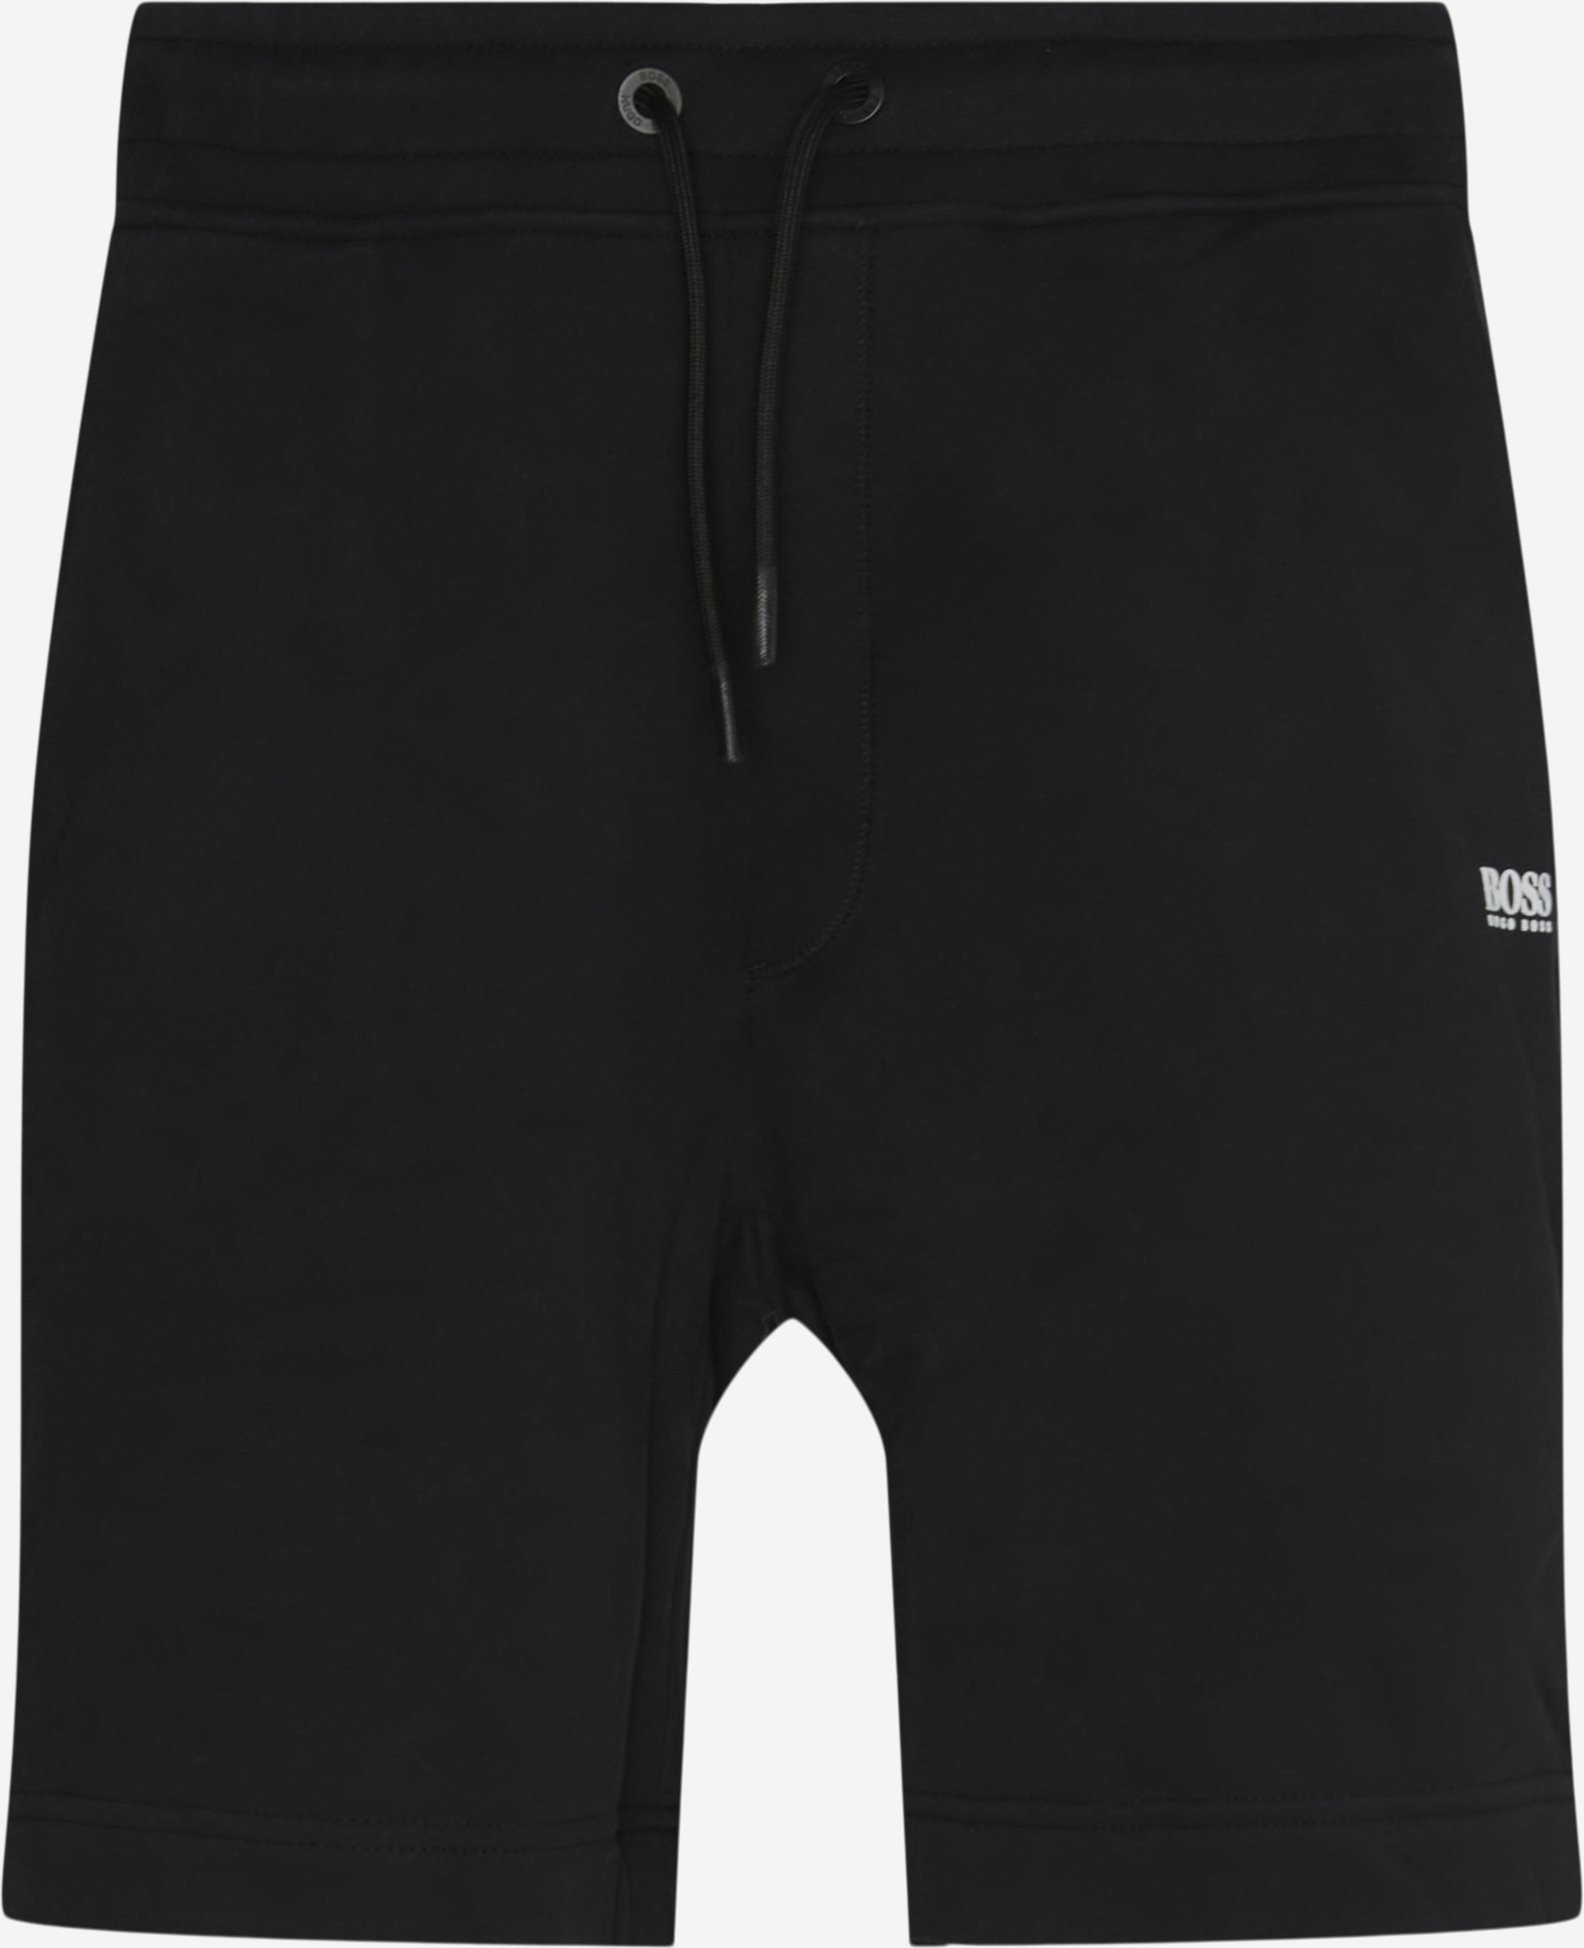 Skeevito Sweatshorts - Shorts - Regular fit - Black